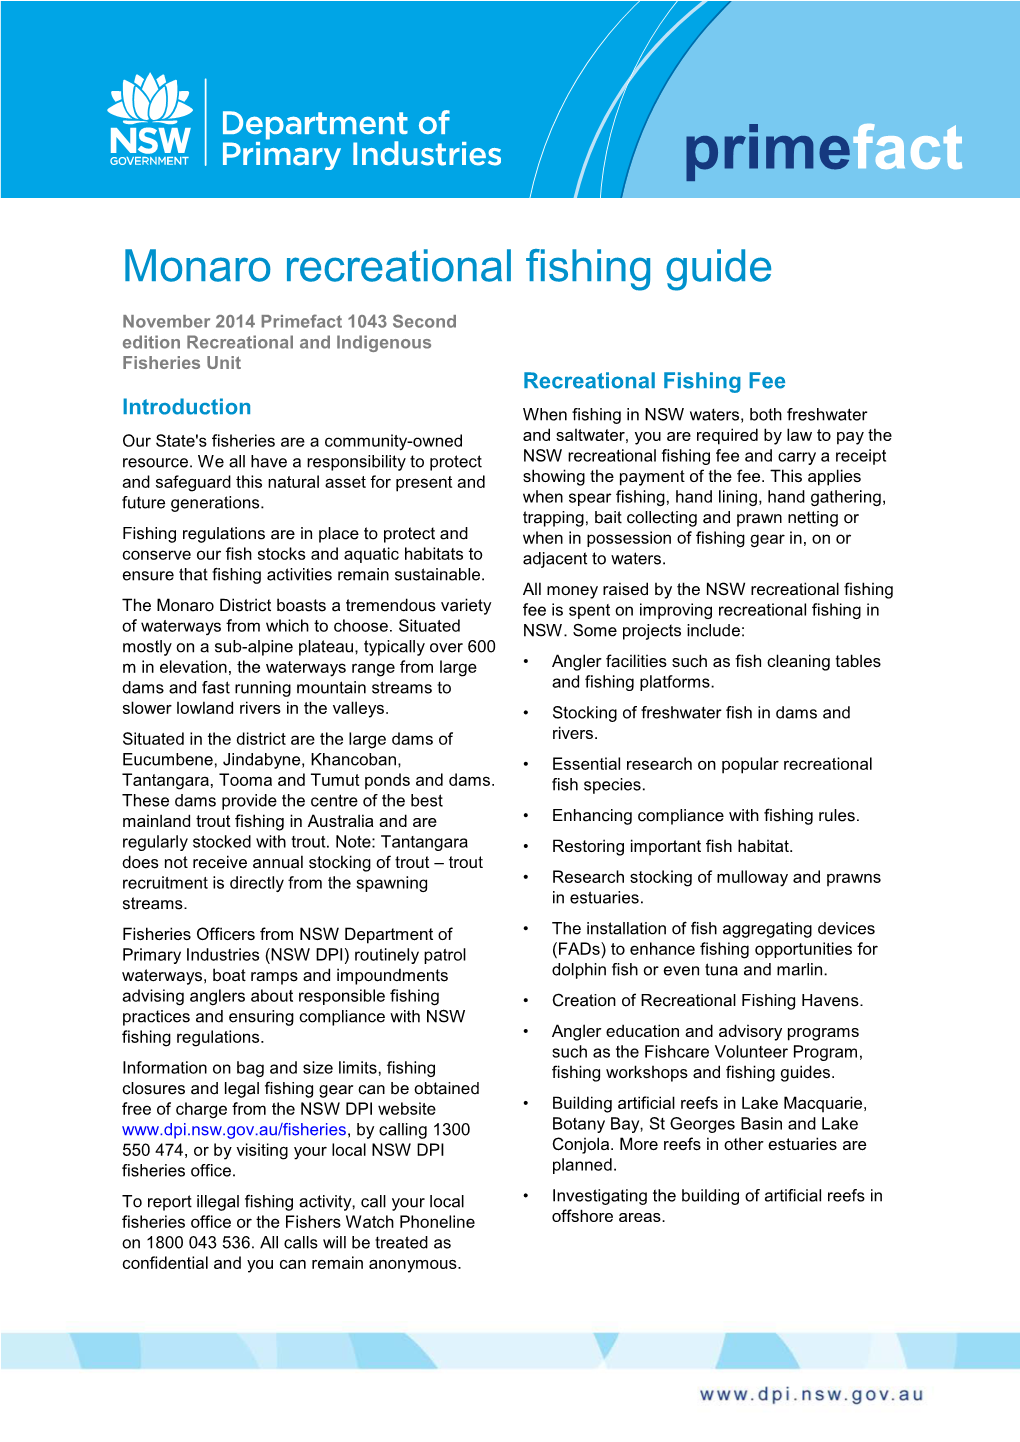 Monaro Recreational Fishing Guide